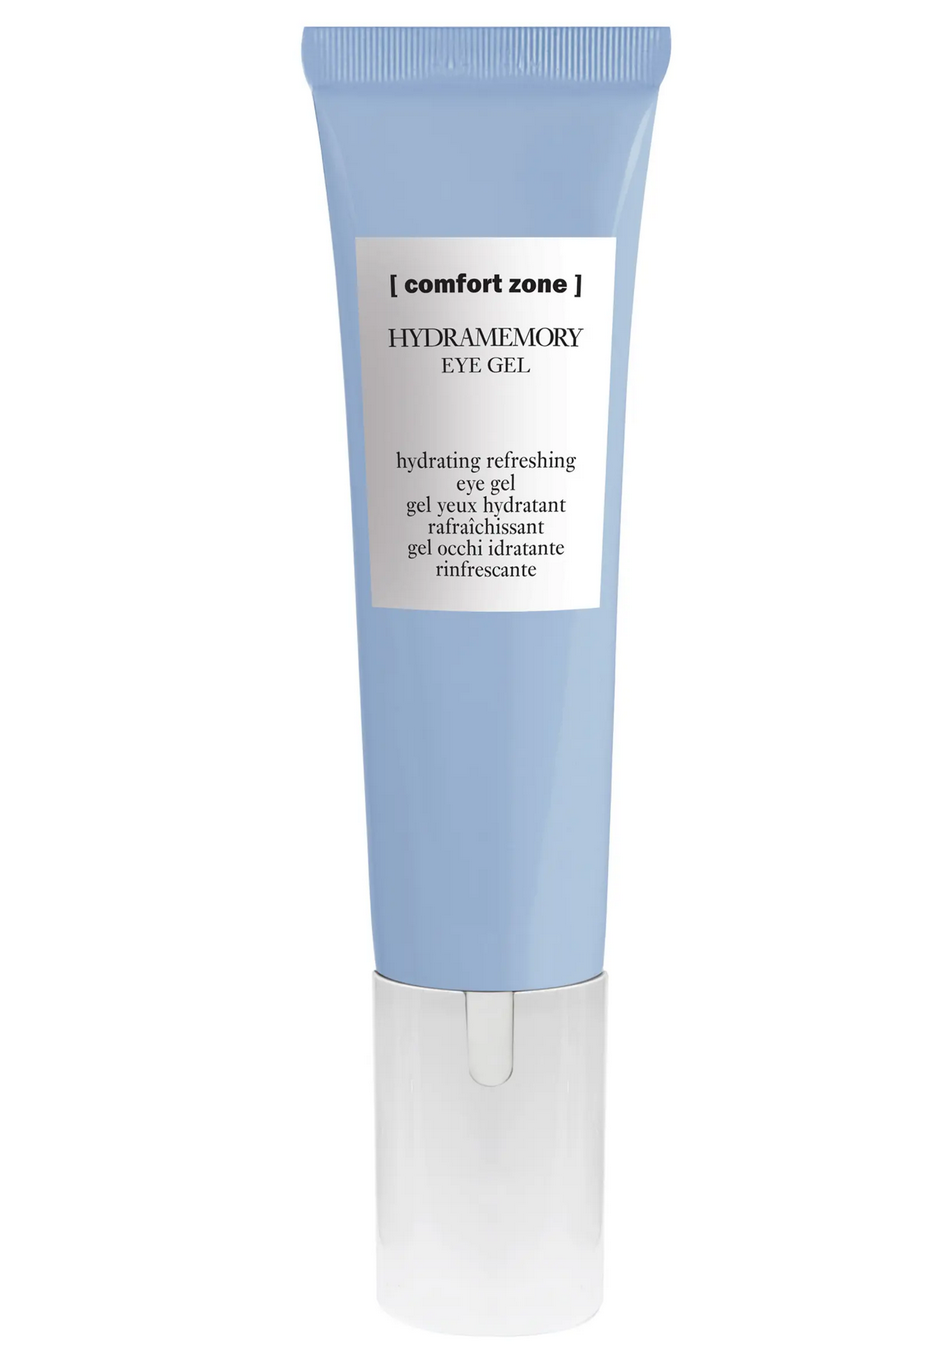 Comfort Zone Hydramemory Eye Cream Gel 0.5 oz / 15 ML New in Box - image 2 of 2